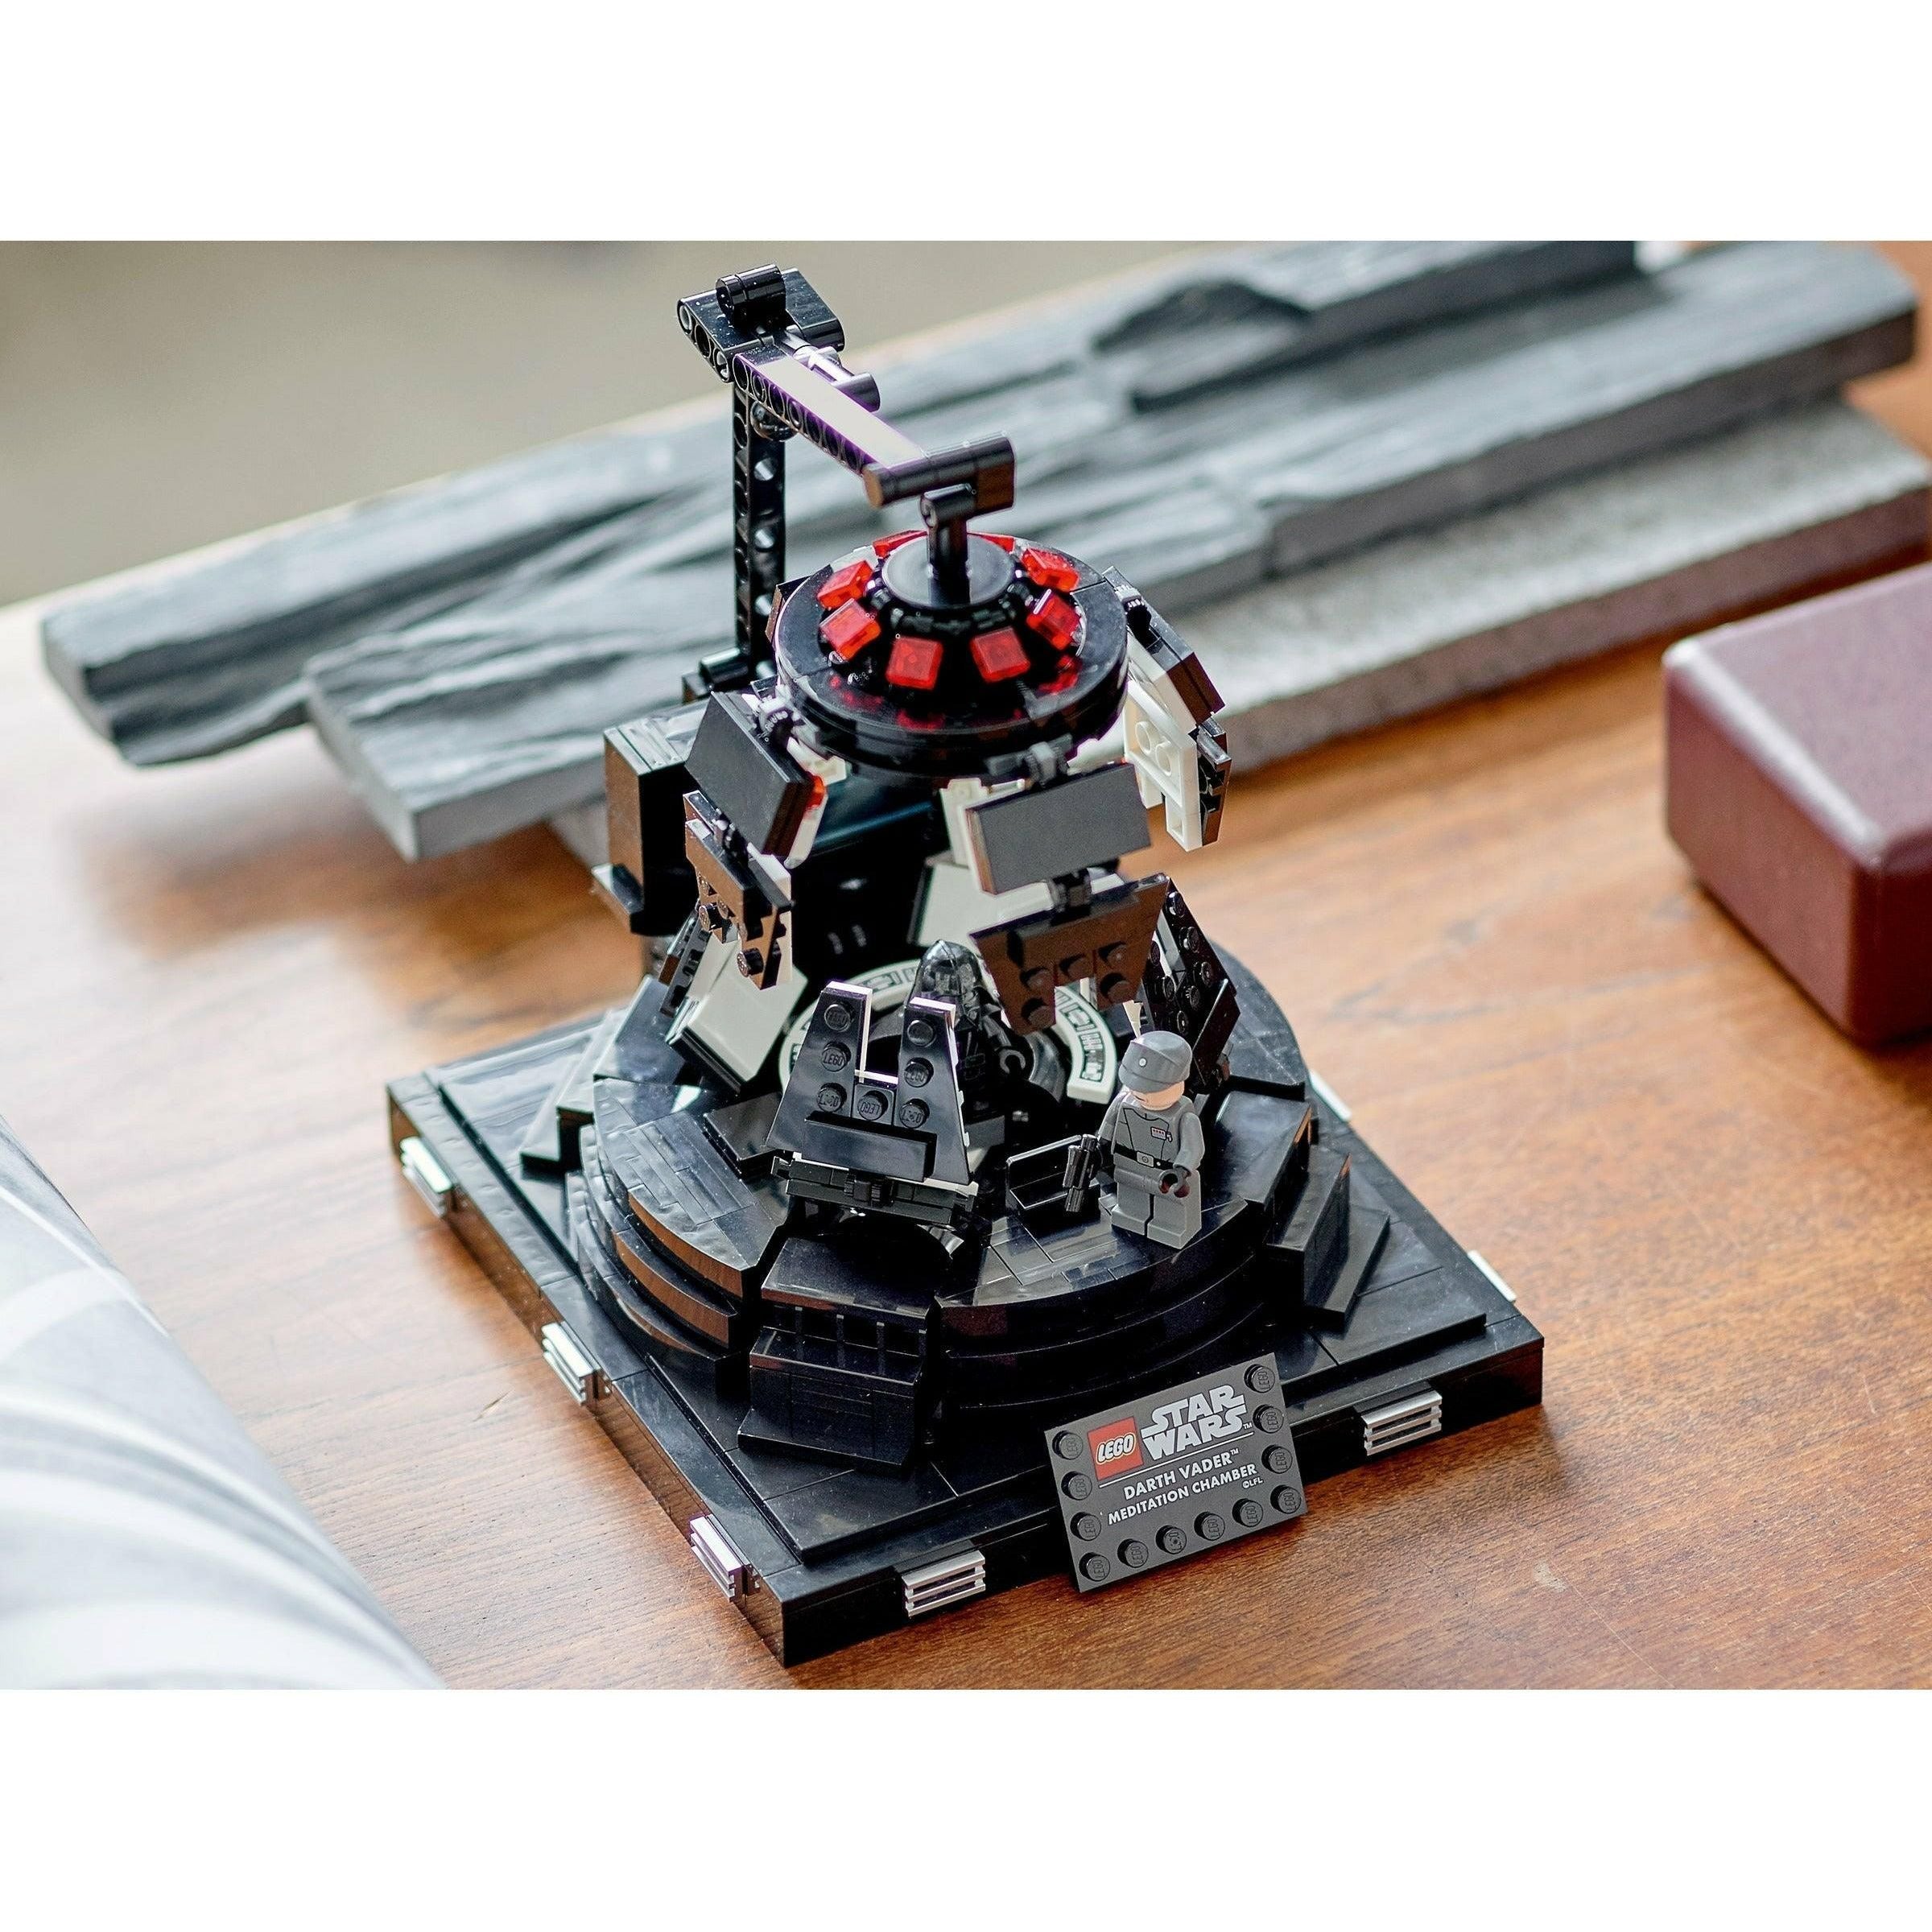 LEGO 75296 Star Wars Darth Vader Meditation Chamber Building Kit (663 Pieces) - BumbleToys - 18+, Boys, Darth Vader, LEGO, OXE, Pre-Order, star wars